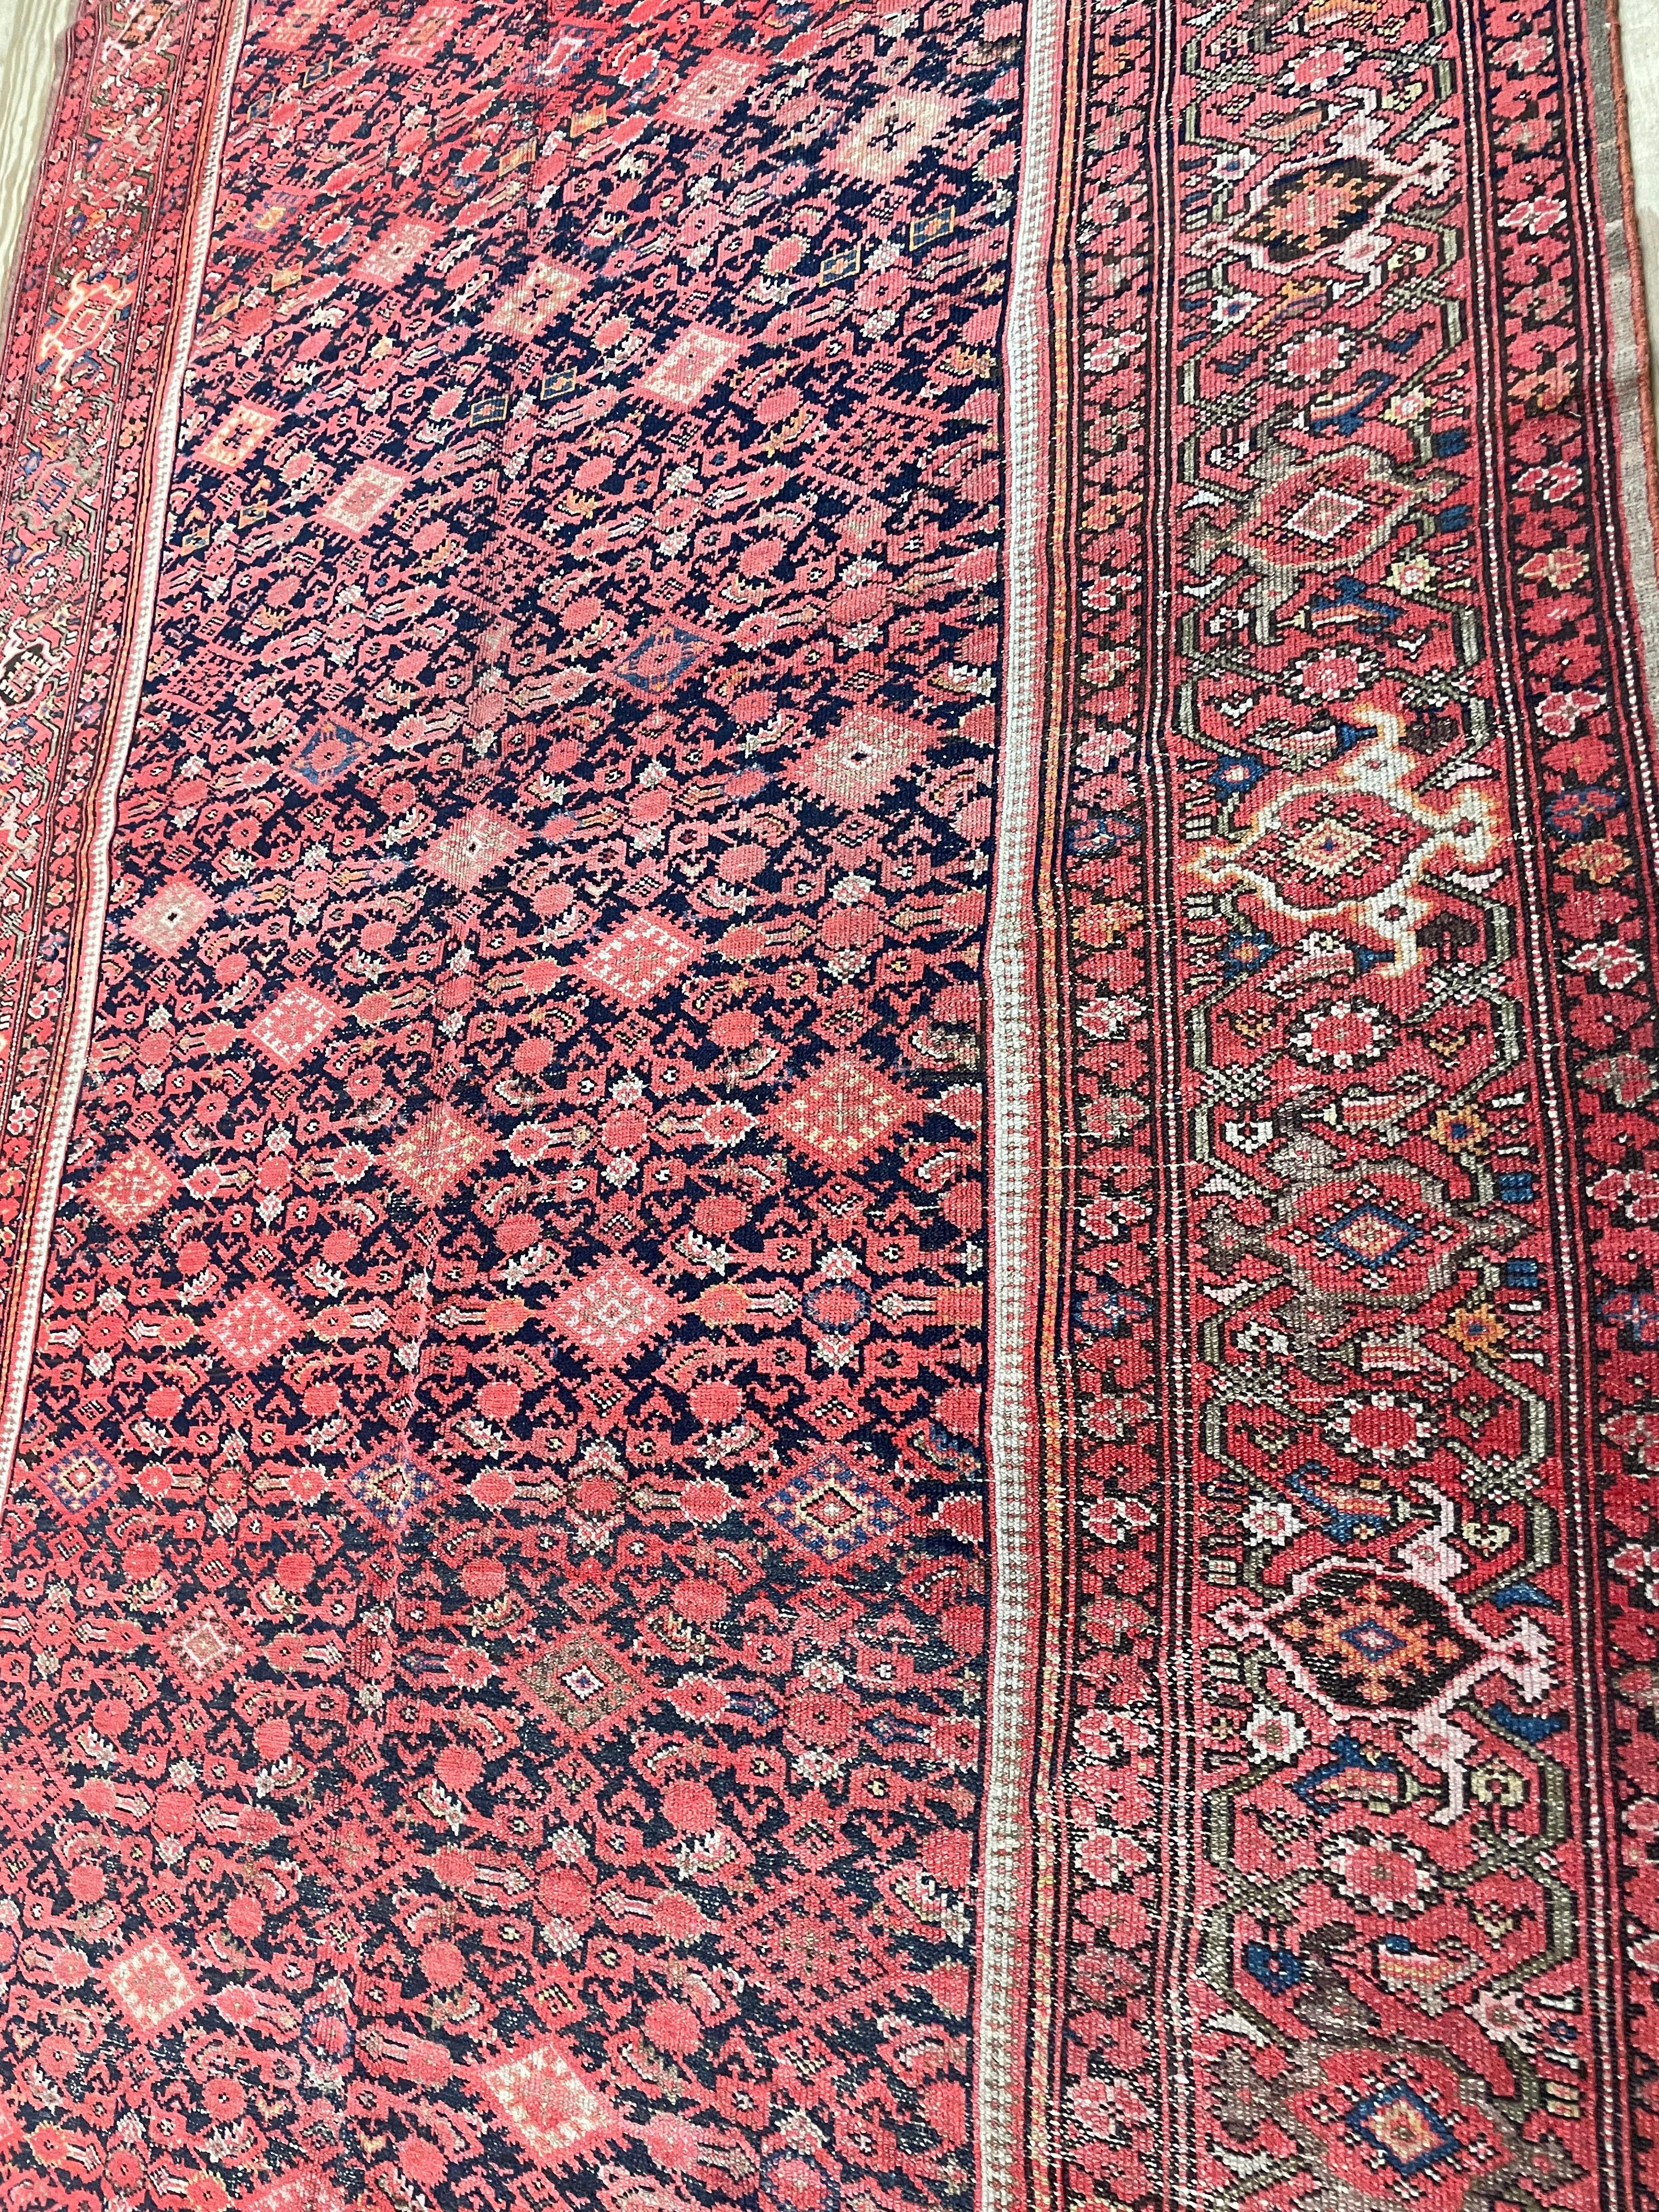 20th Century Antique Malayer Carpet For Sale